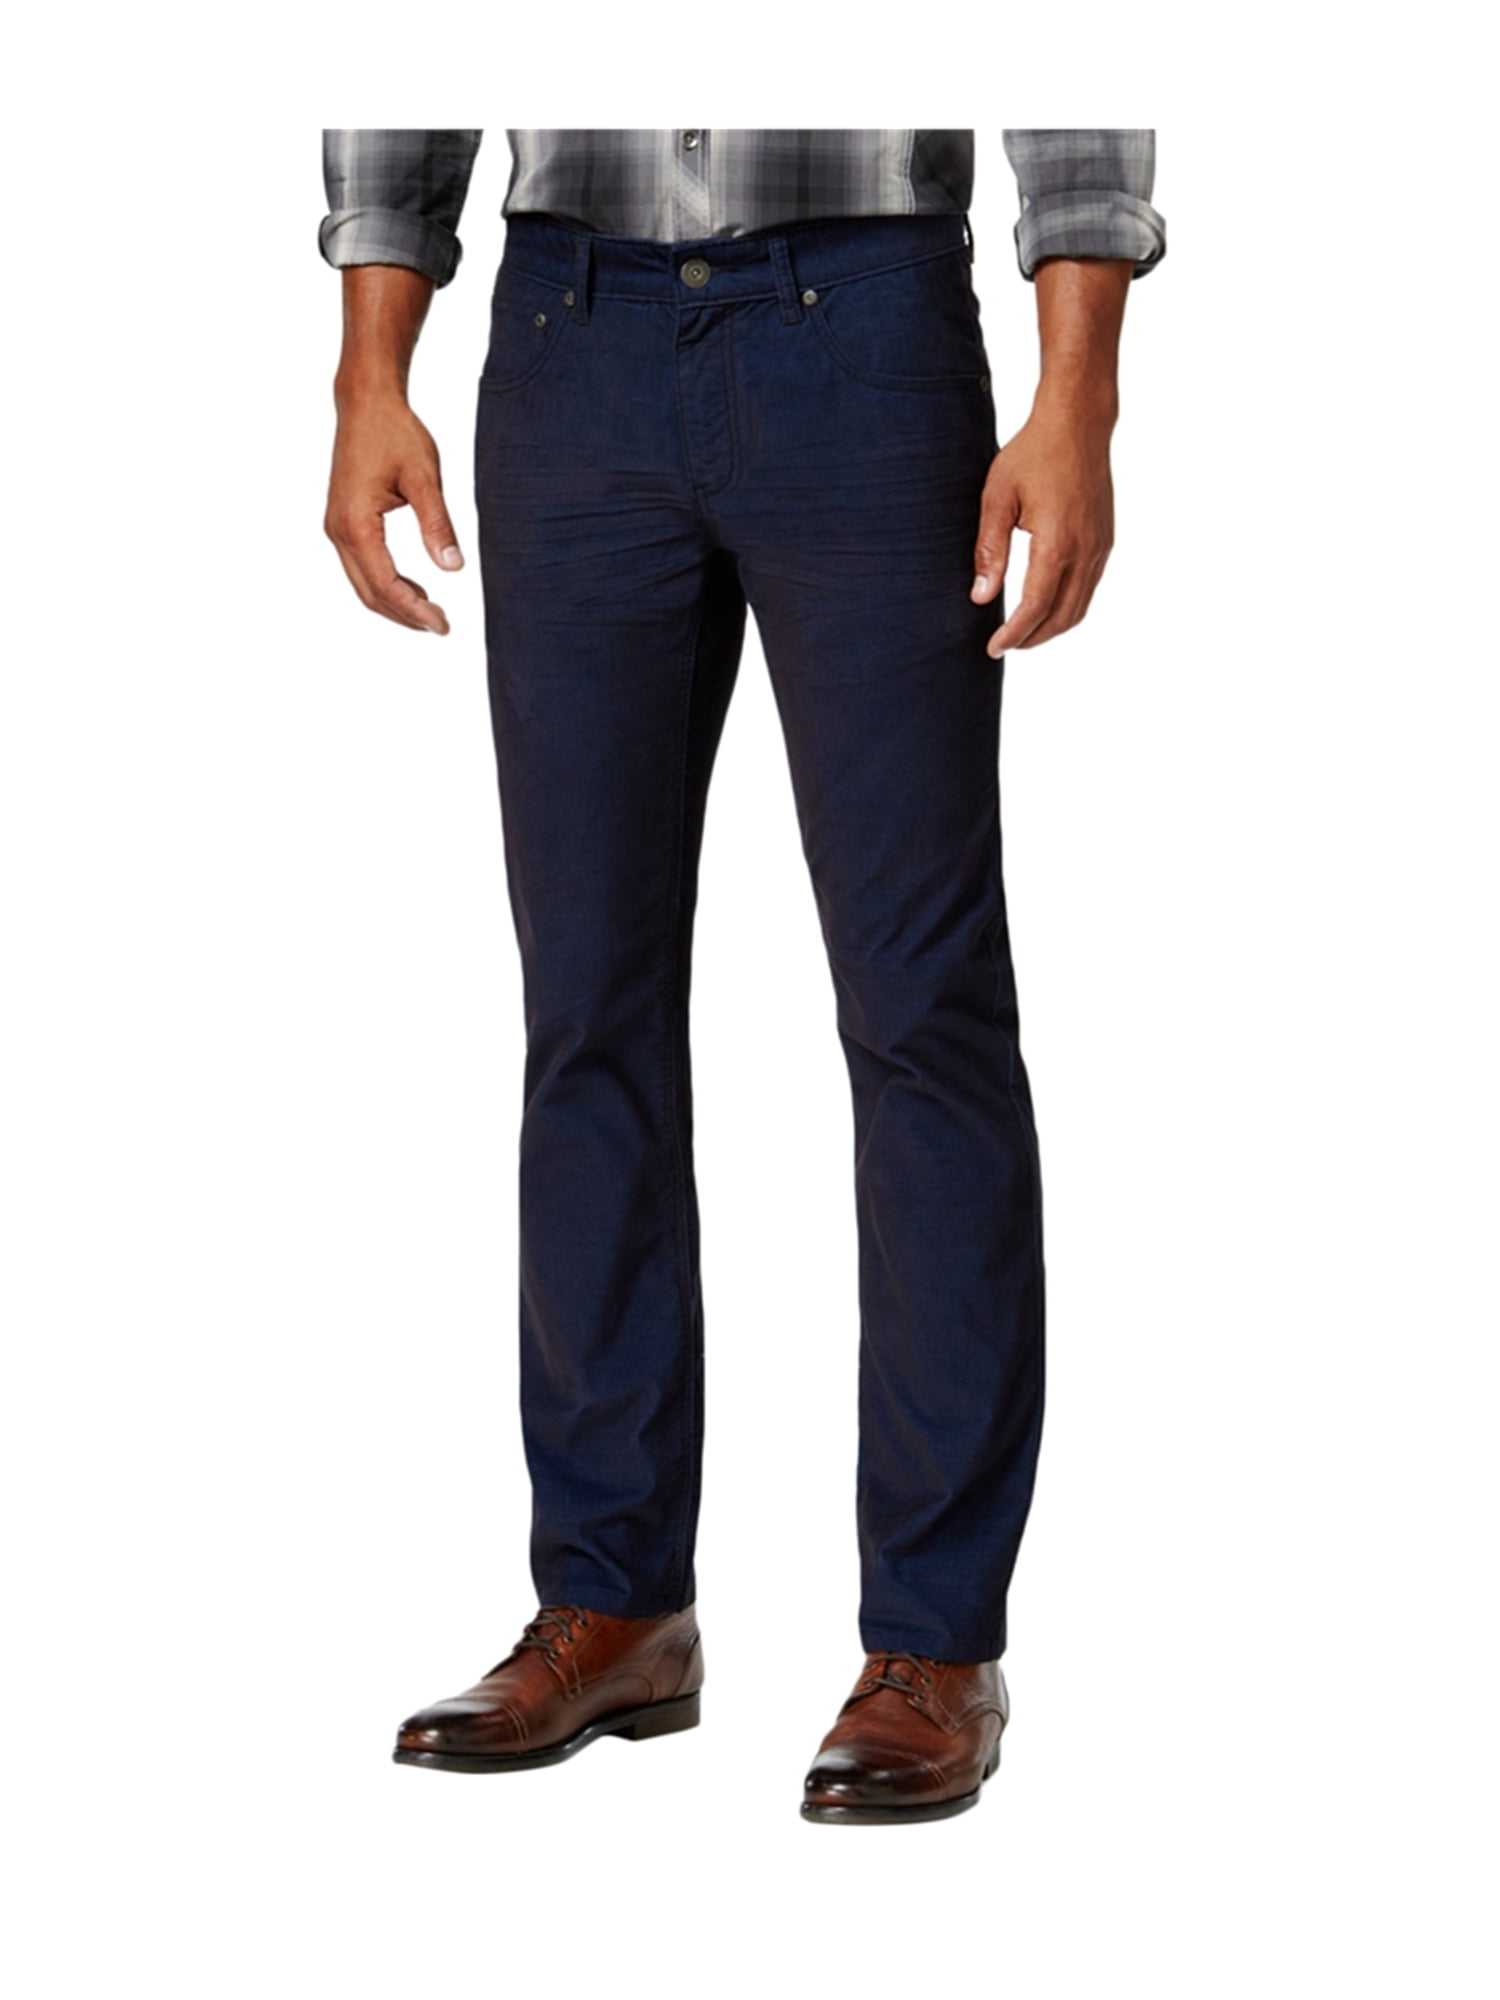 Mens Corduroy Cord Cotton Pants Adult Smart Casual Office Belt Pocket Trouser 